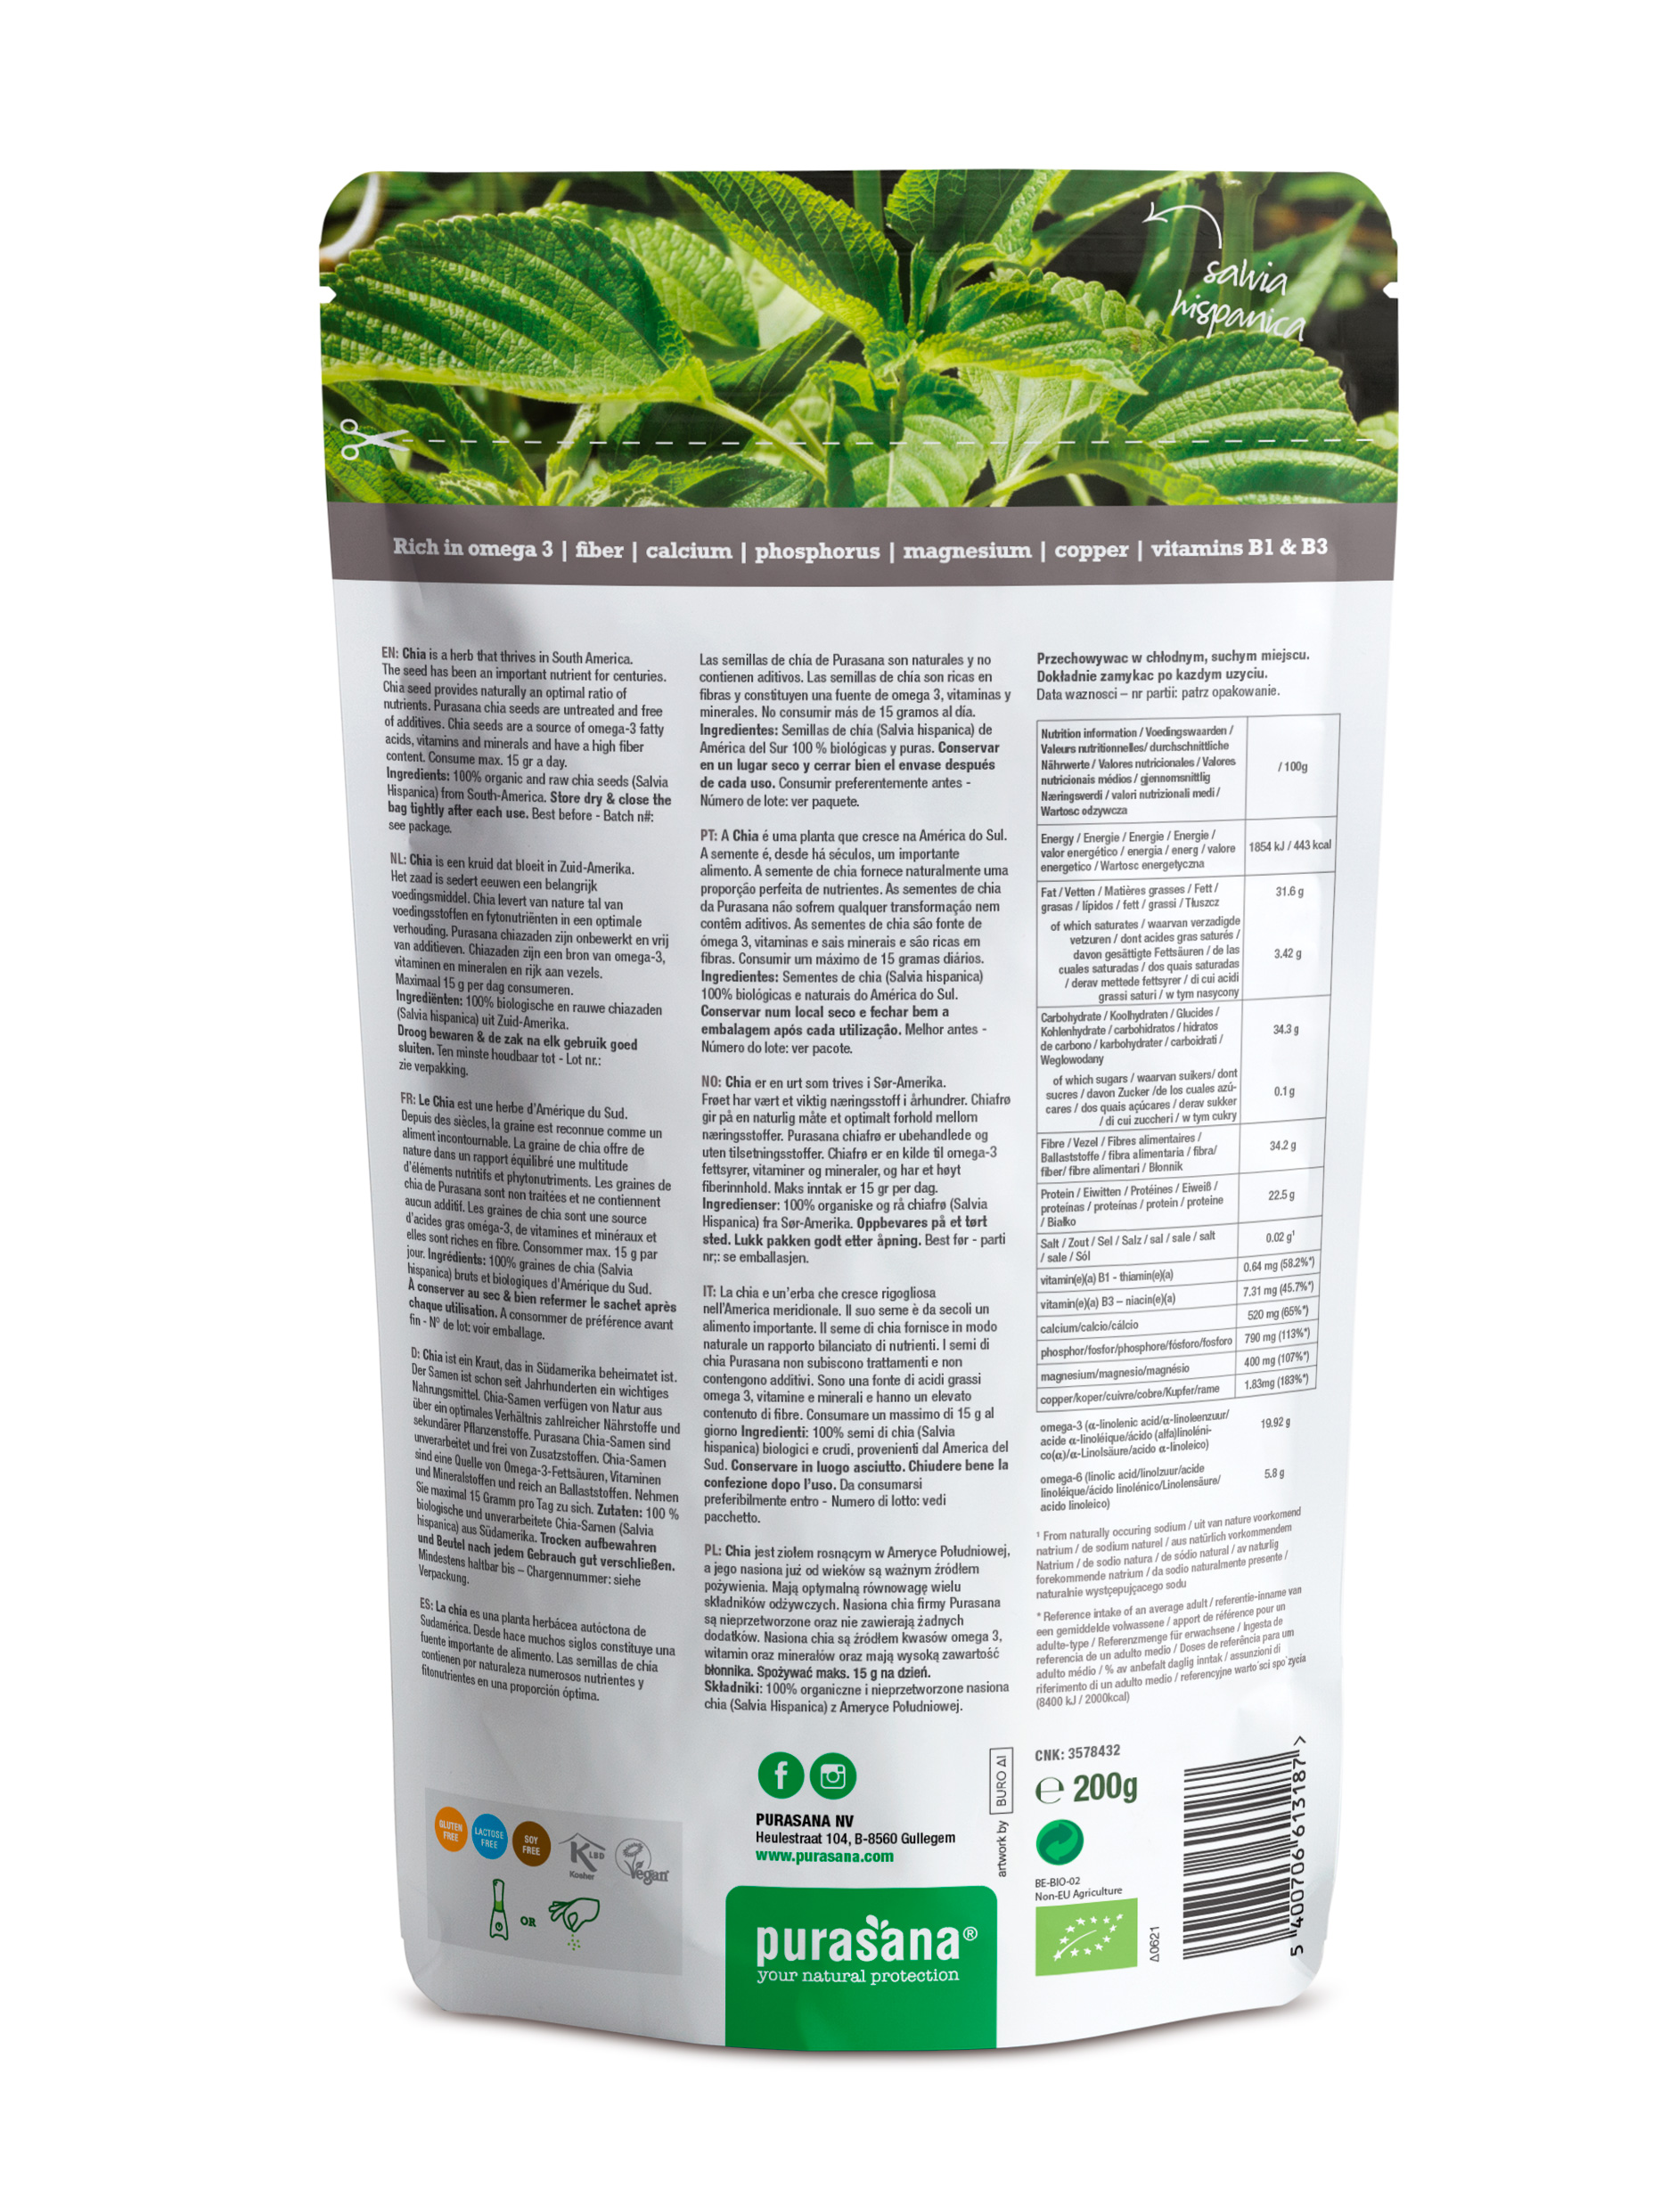 Chia Seeds Bio - Powder - 350g - Purasana